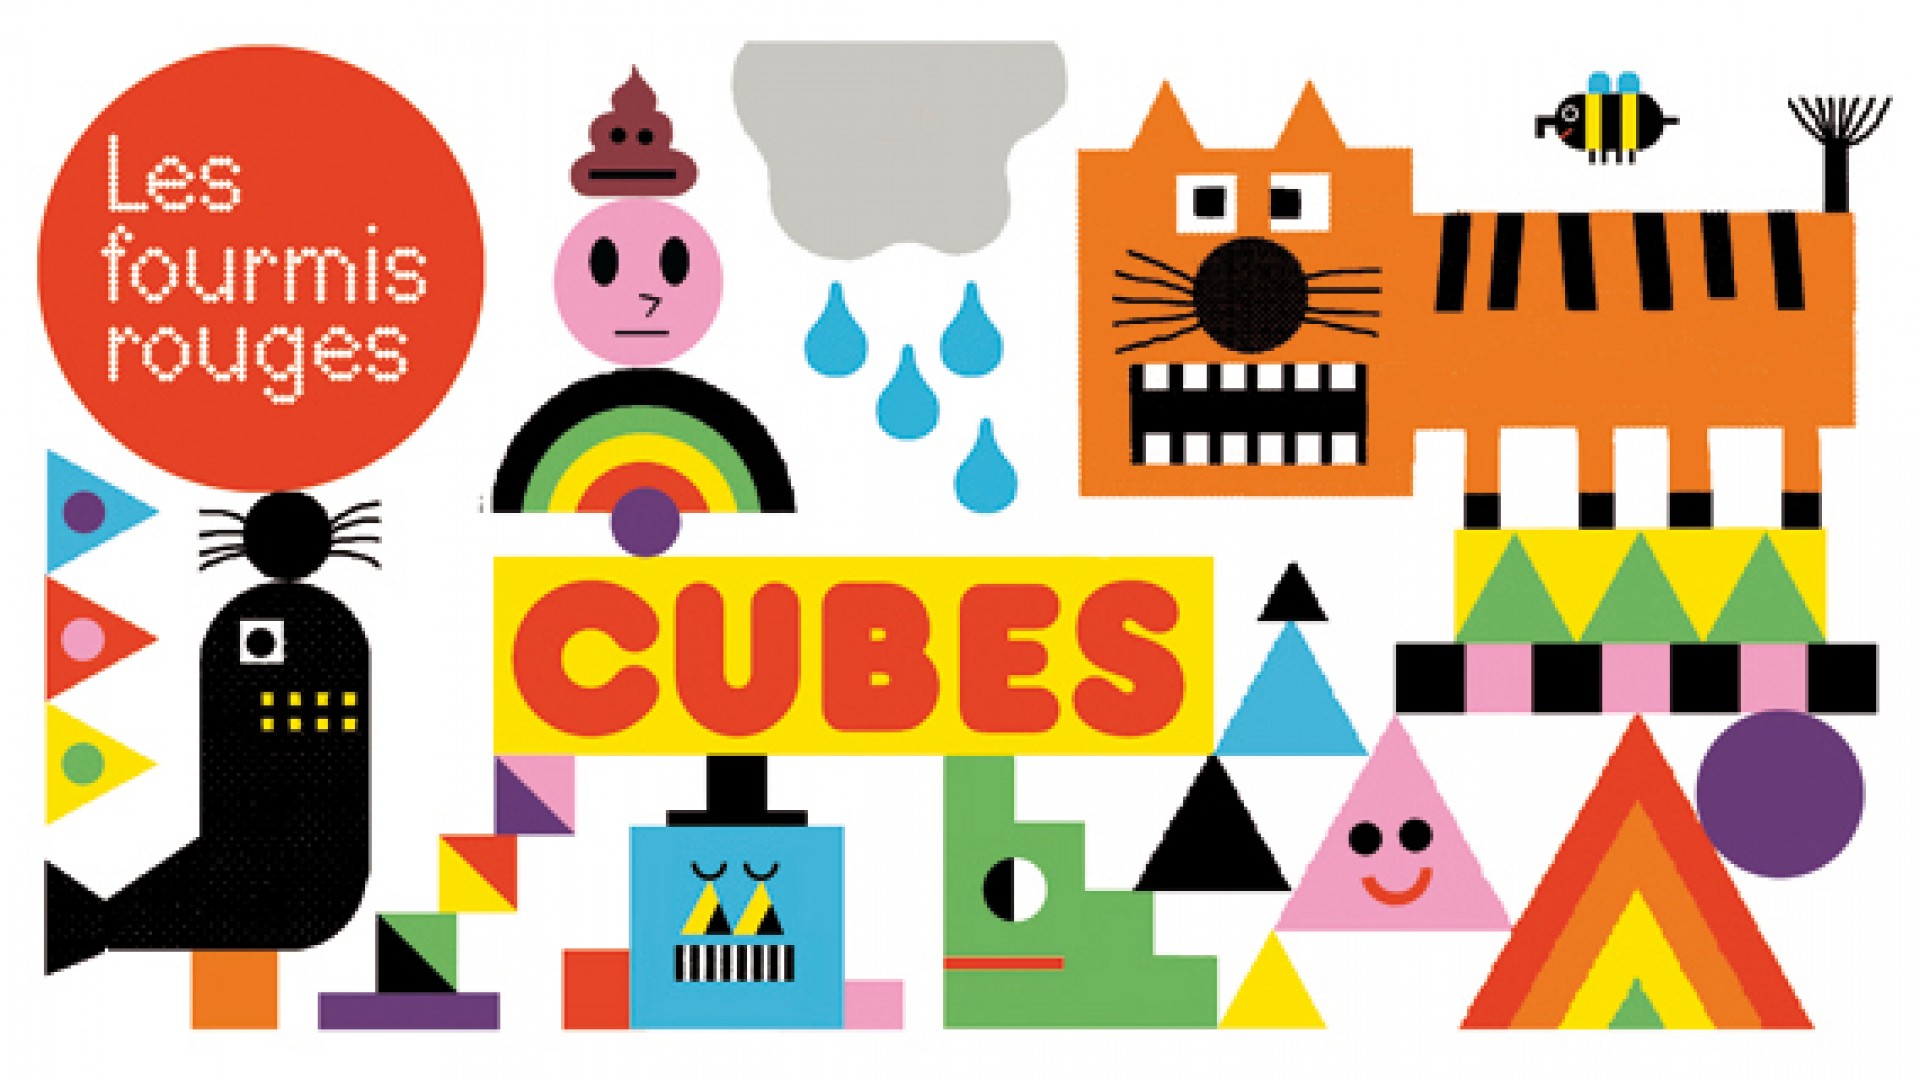 Launch party for the "Cubes" series at indie publisher Les Fourmis Rouges